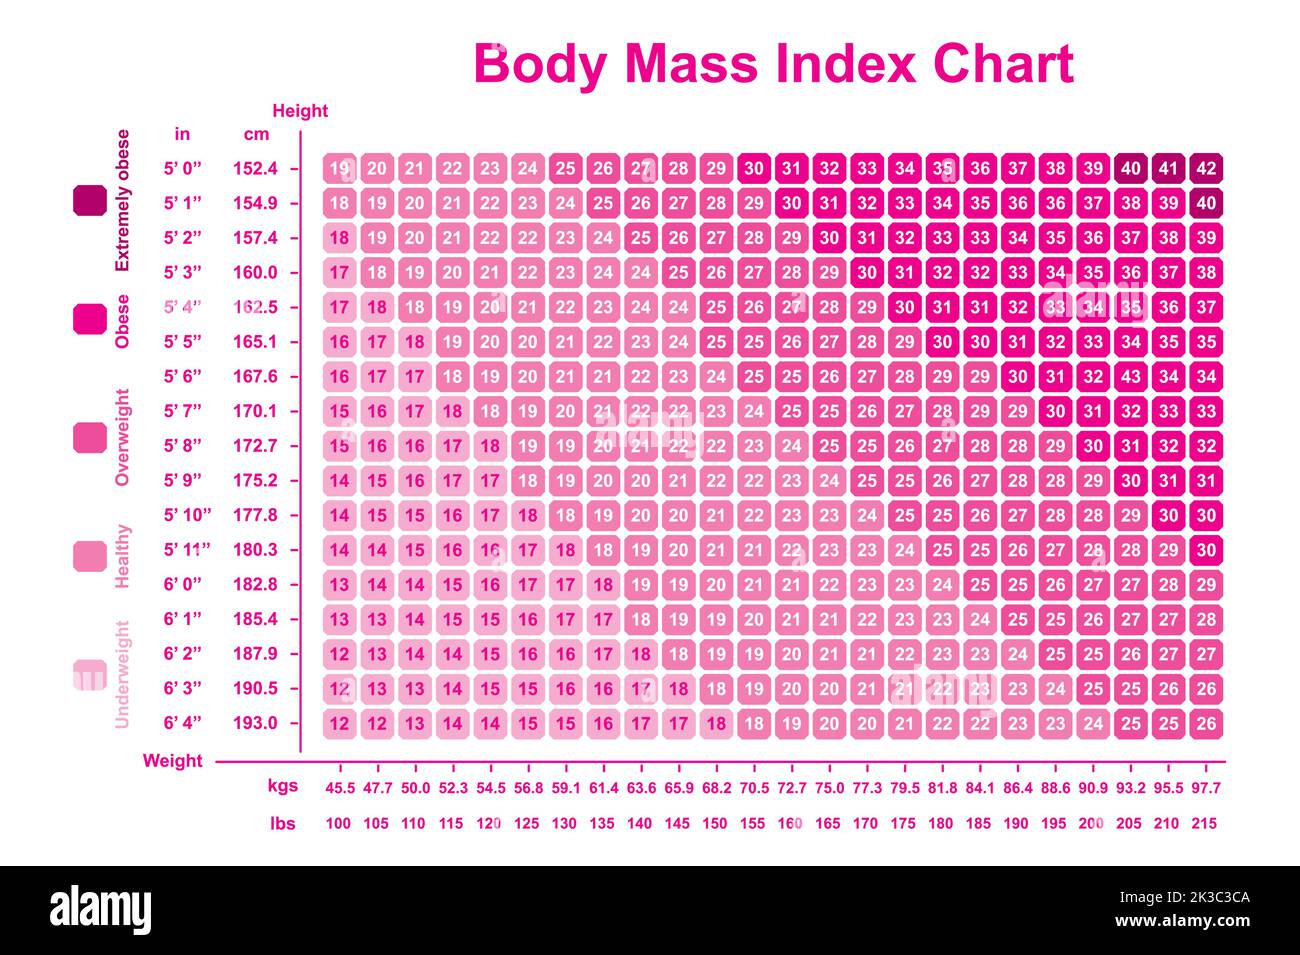 https://c8.alamy.com/comp/2K3C3CA/body-mass-index-bmi-chart-bmi-calculator-to-checking-your-body-mass-index-colorful-symbols-vector-illustration-2K3C3CA.jpg